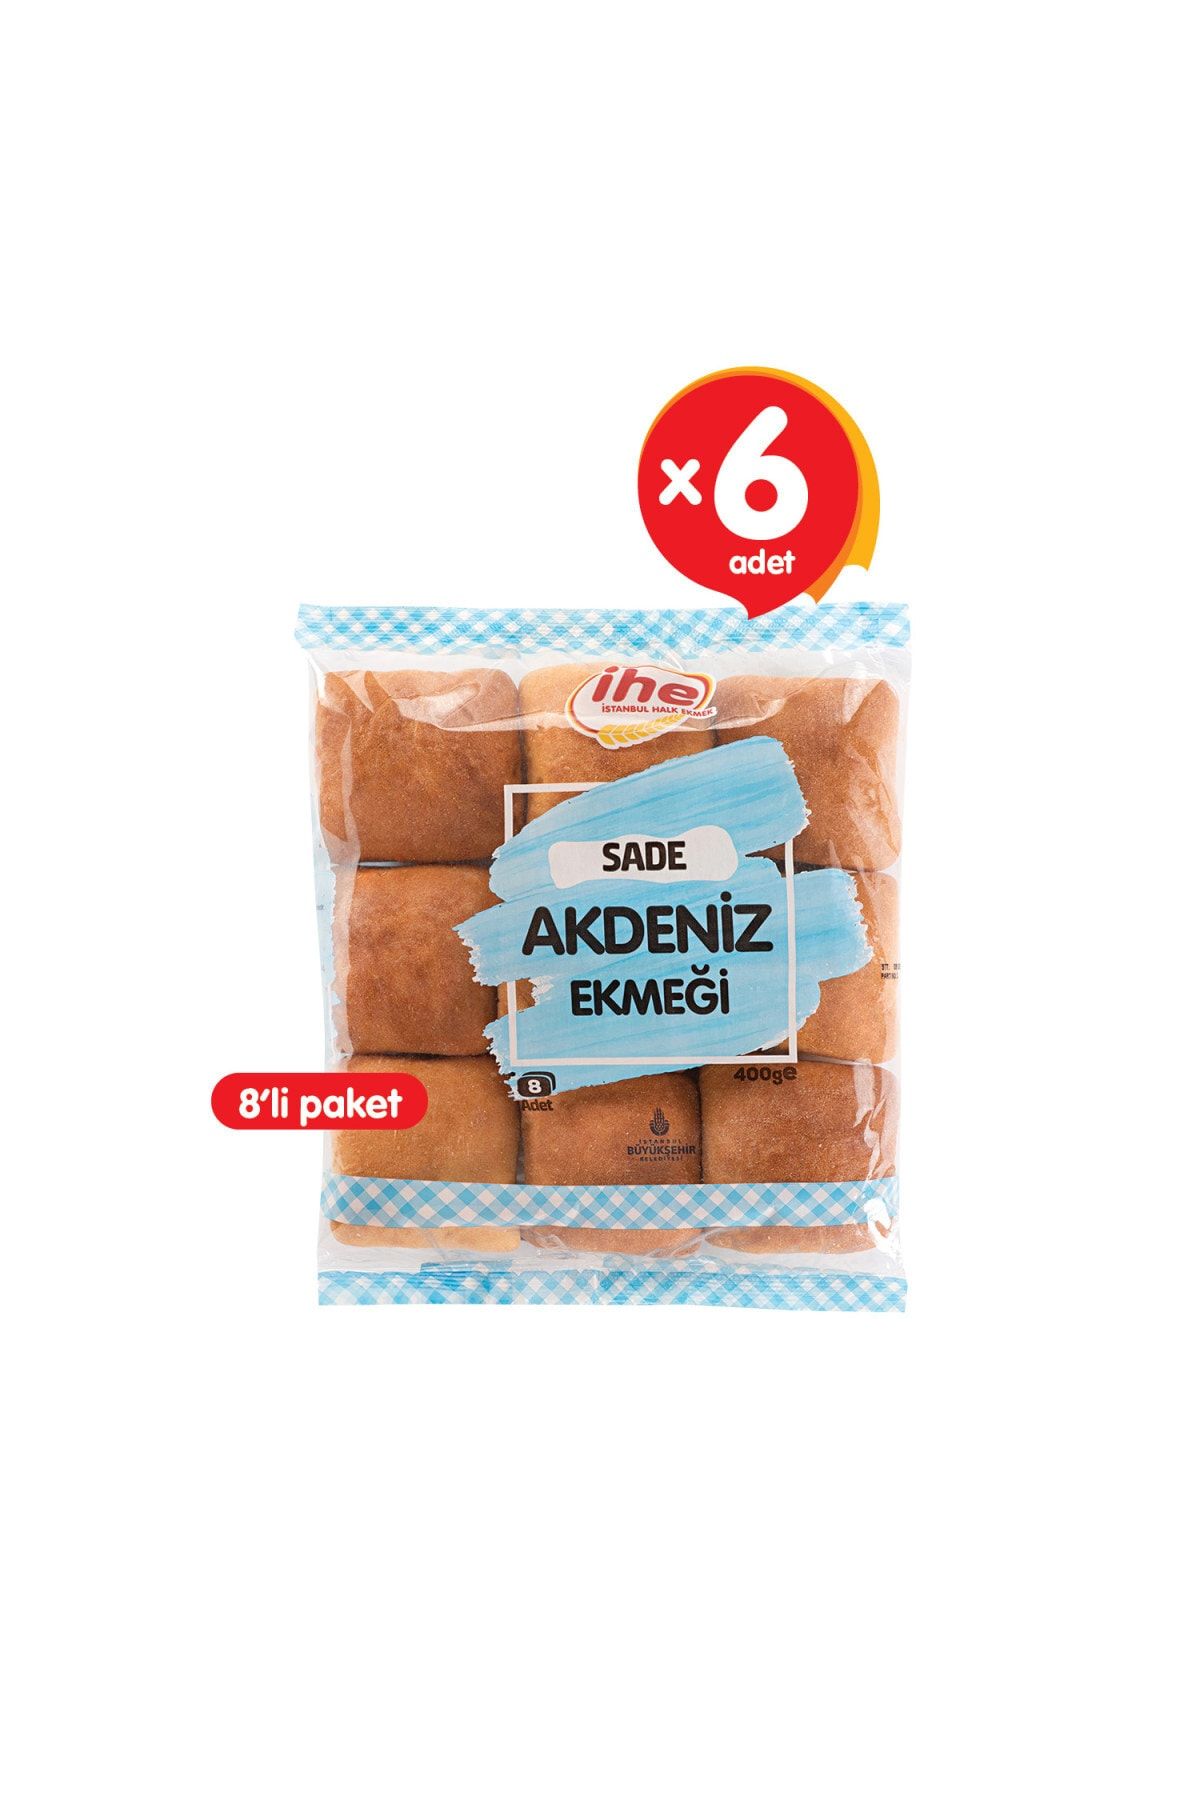 İhe Akdeniz Ekmeği 400g (6 ADET)